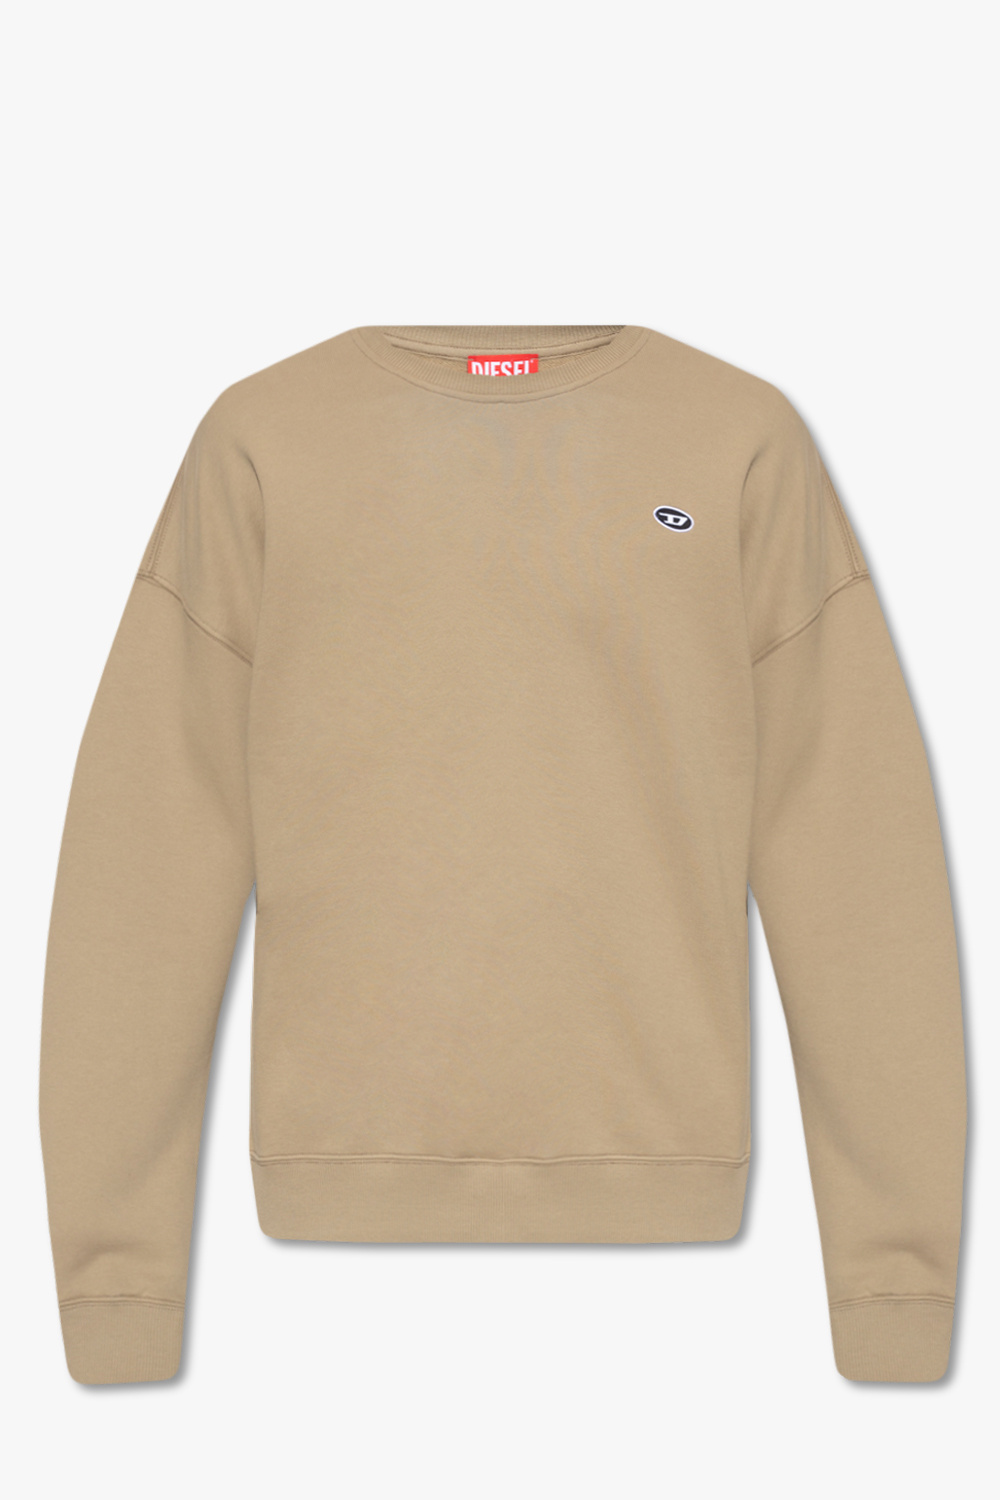 Diesel ‘S-Rob-Doval-Pj’ sweatshirt with logo | Men's Clothing | Vitkac